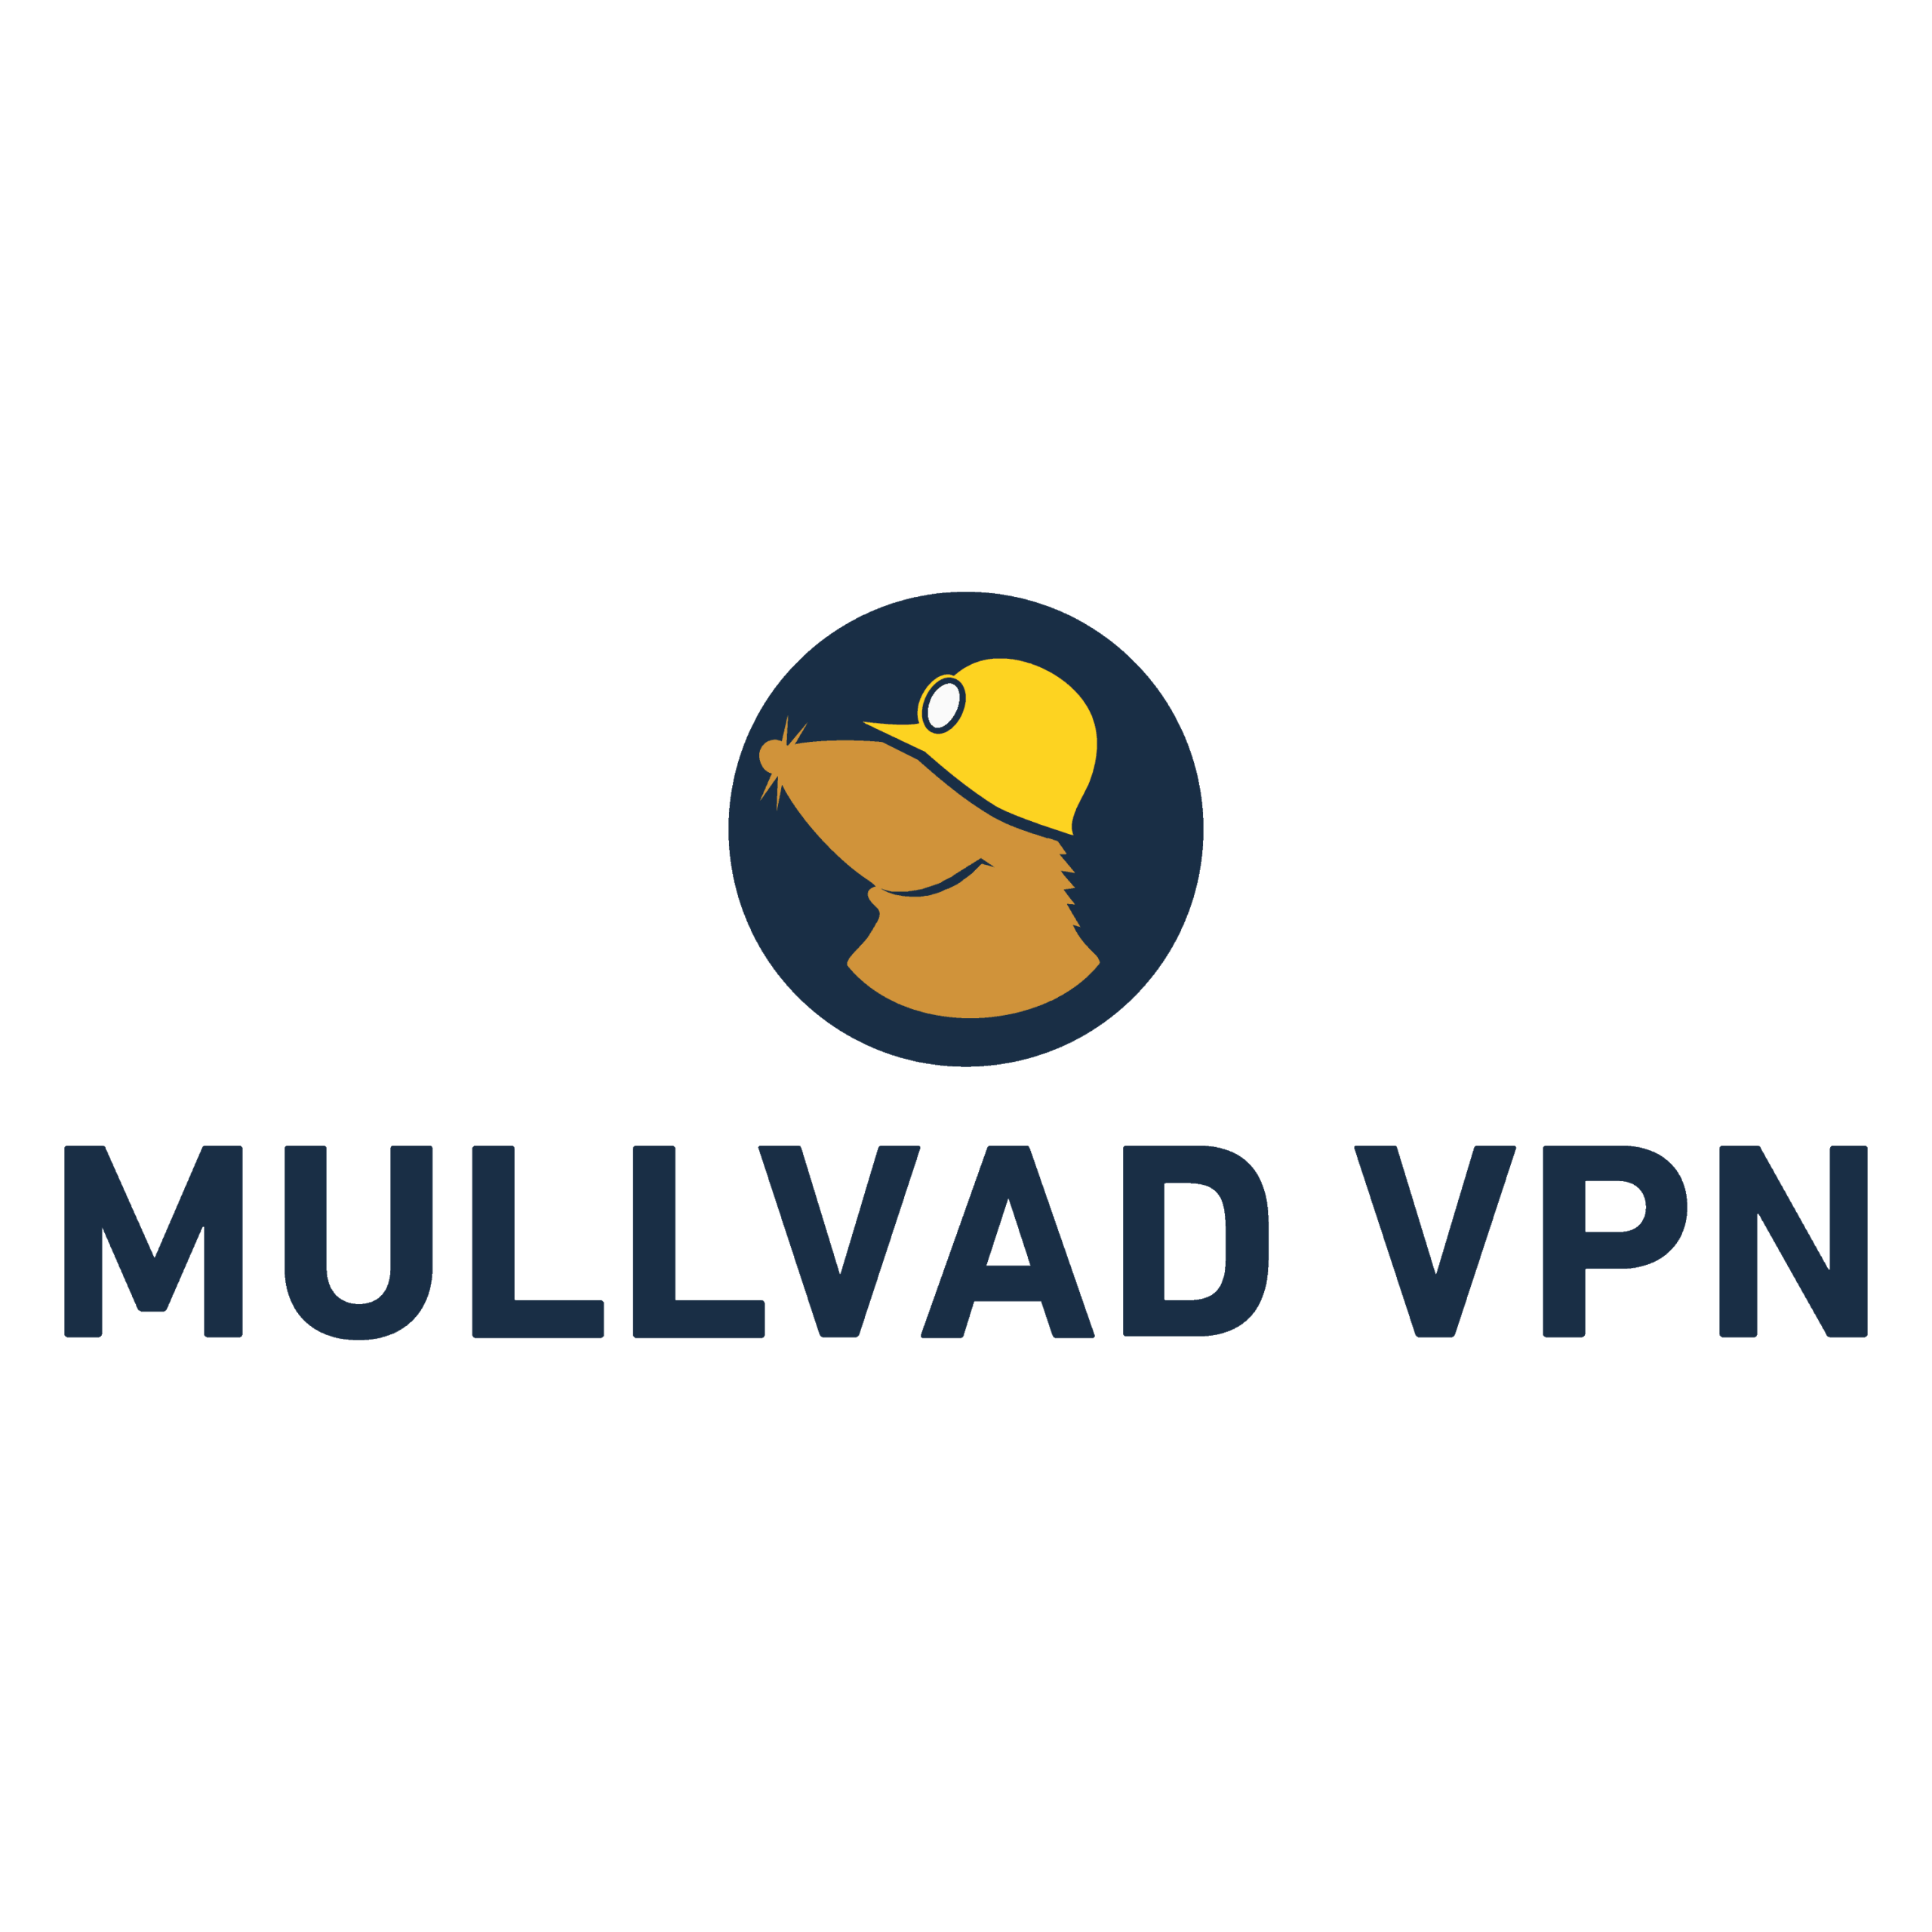 mullvad-png-logo-large